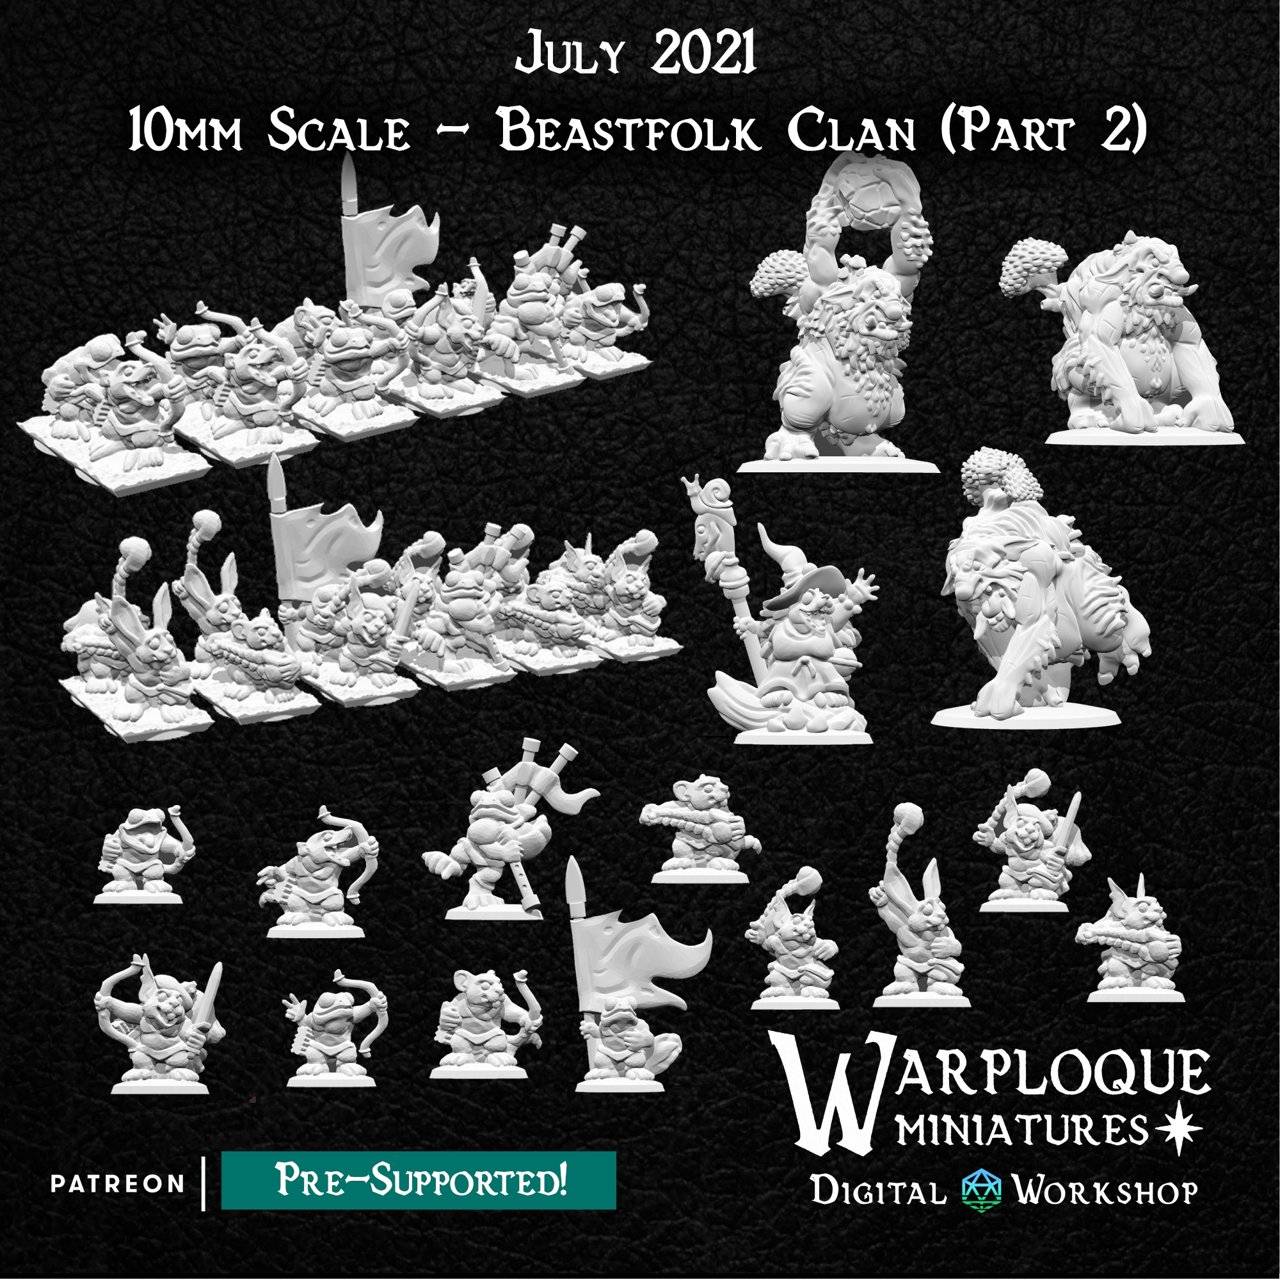 Warploque Miniatures July 2021 (Beastfolk Part 2) Warloque Miniature  MINISTL